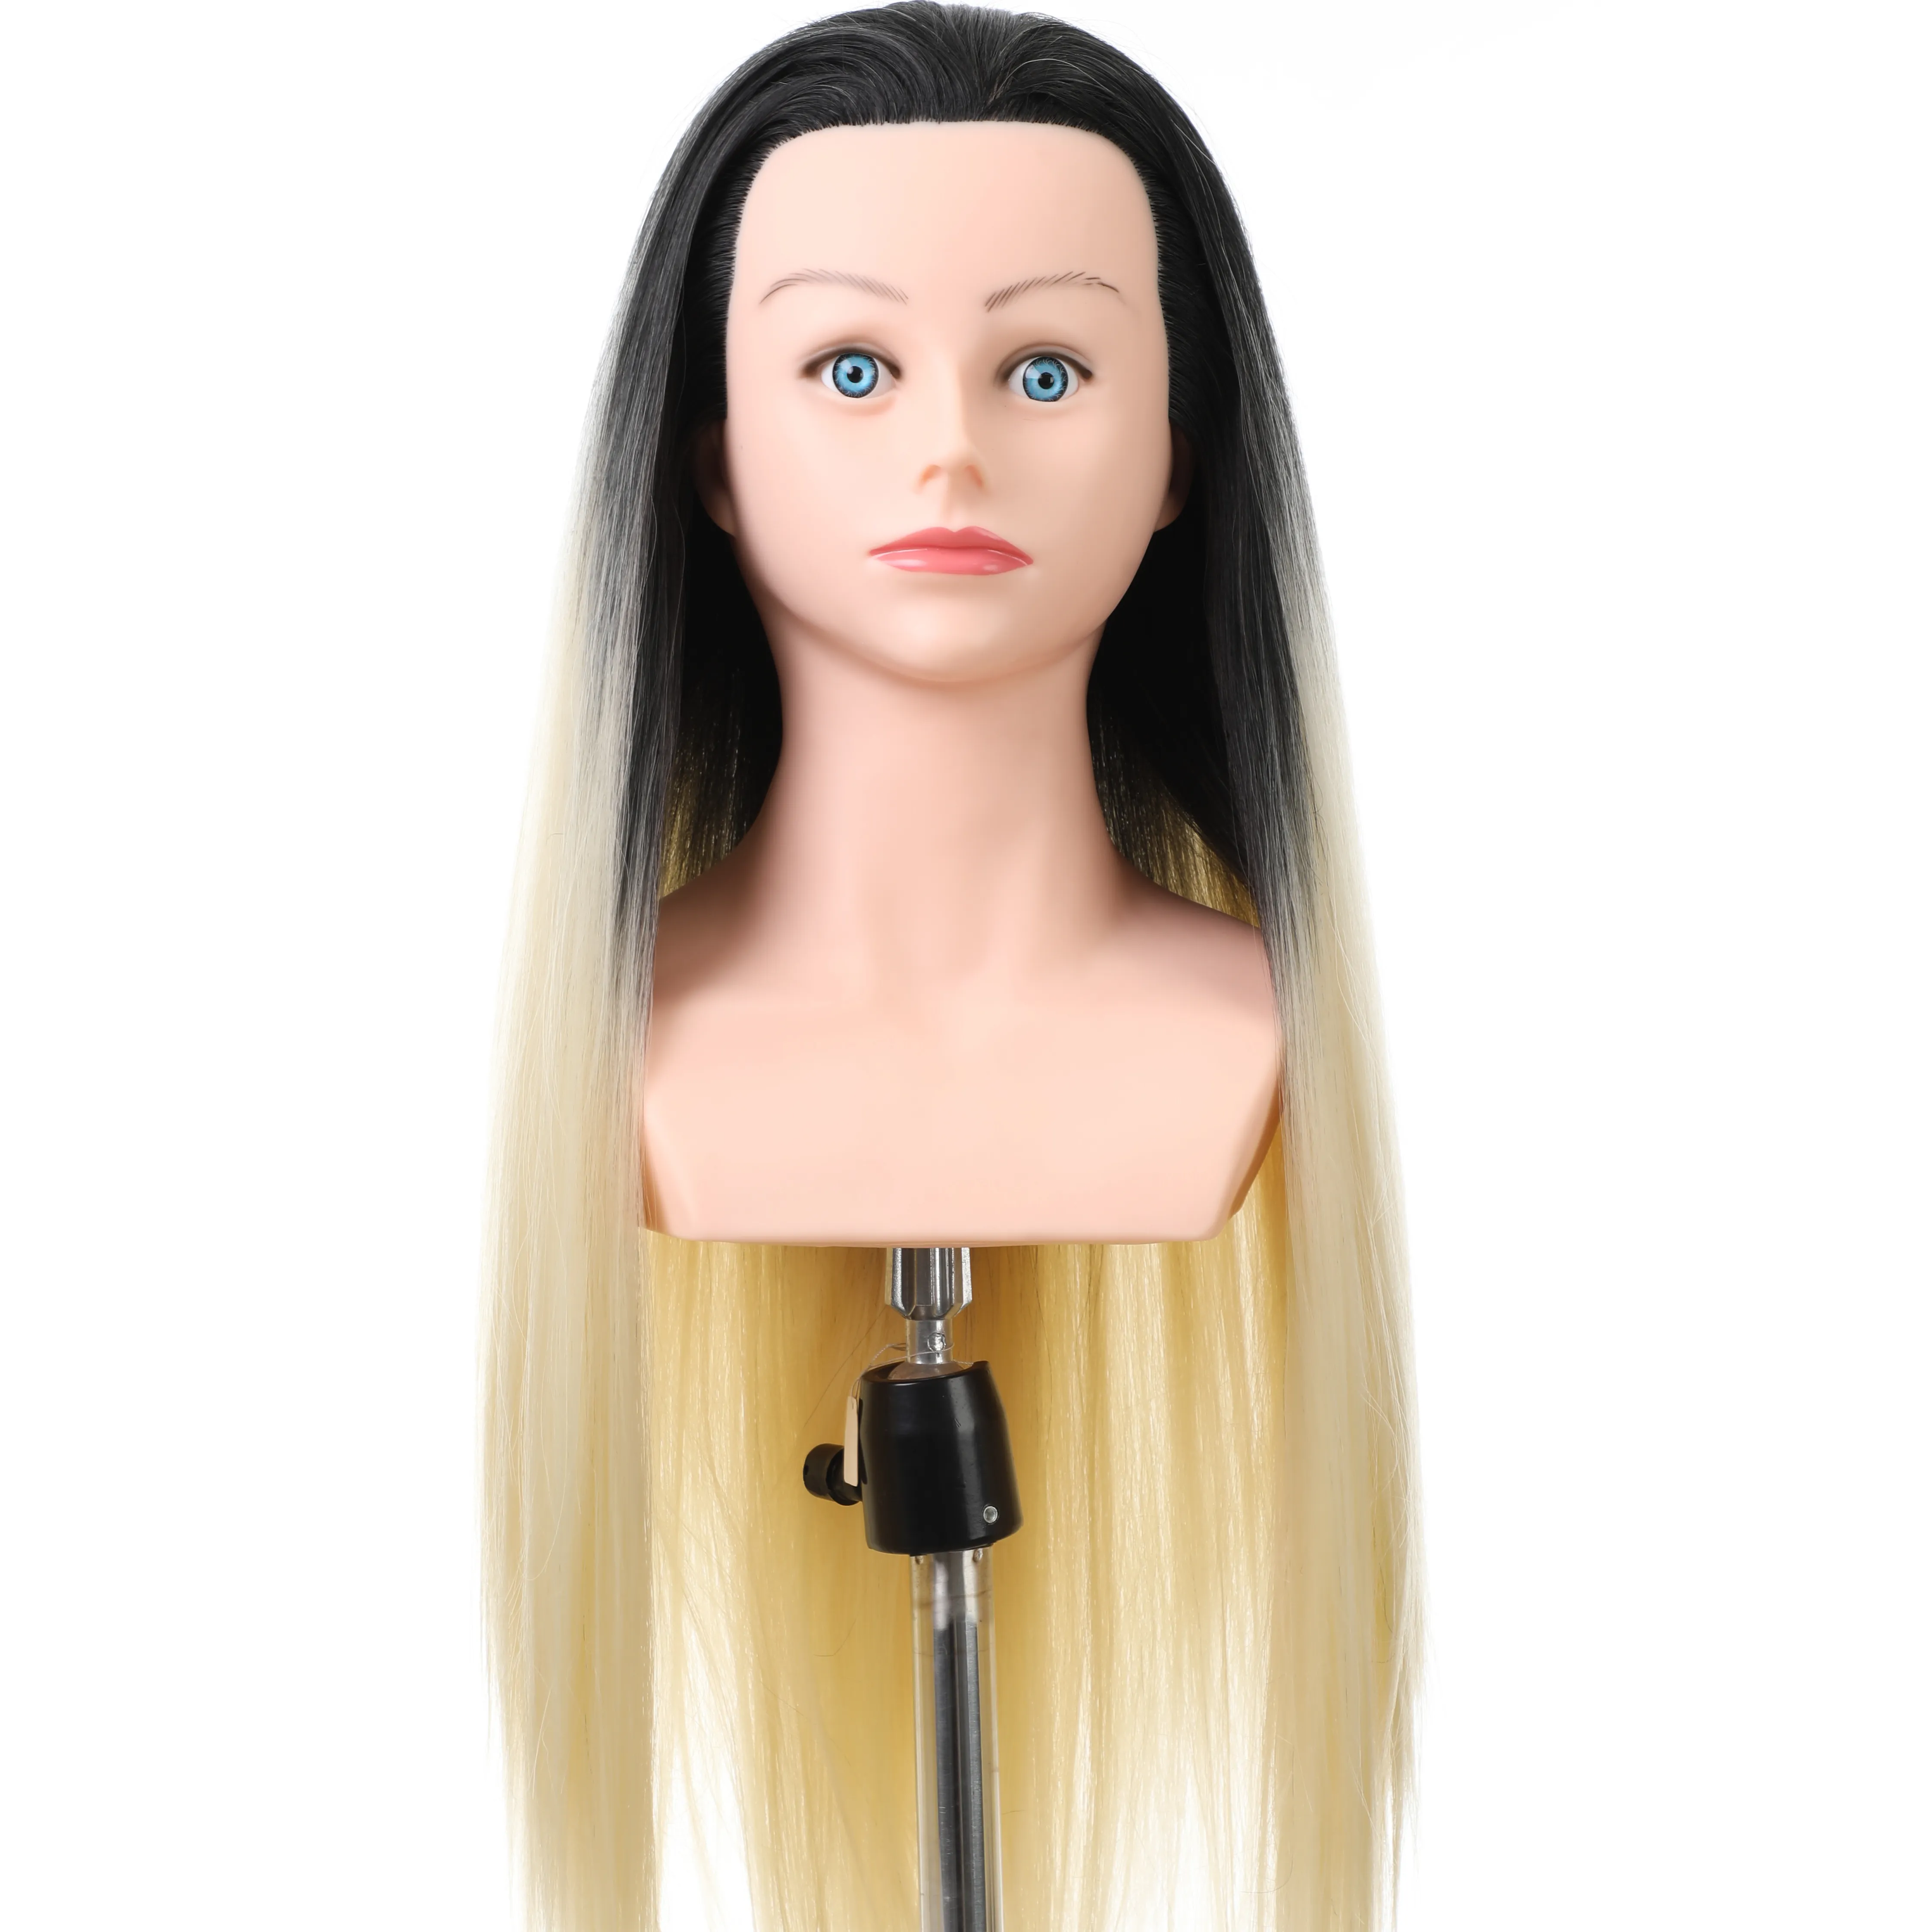 salon 100% real hair female mannequin head training head styling cosmetology manikin head